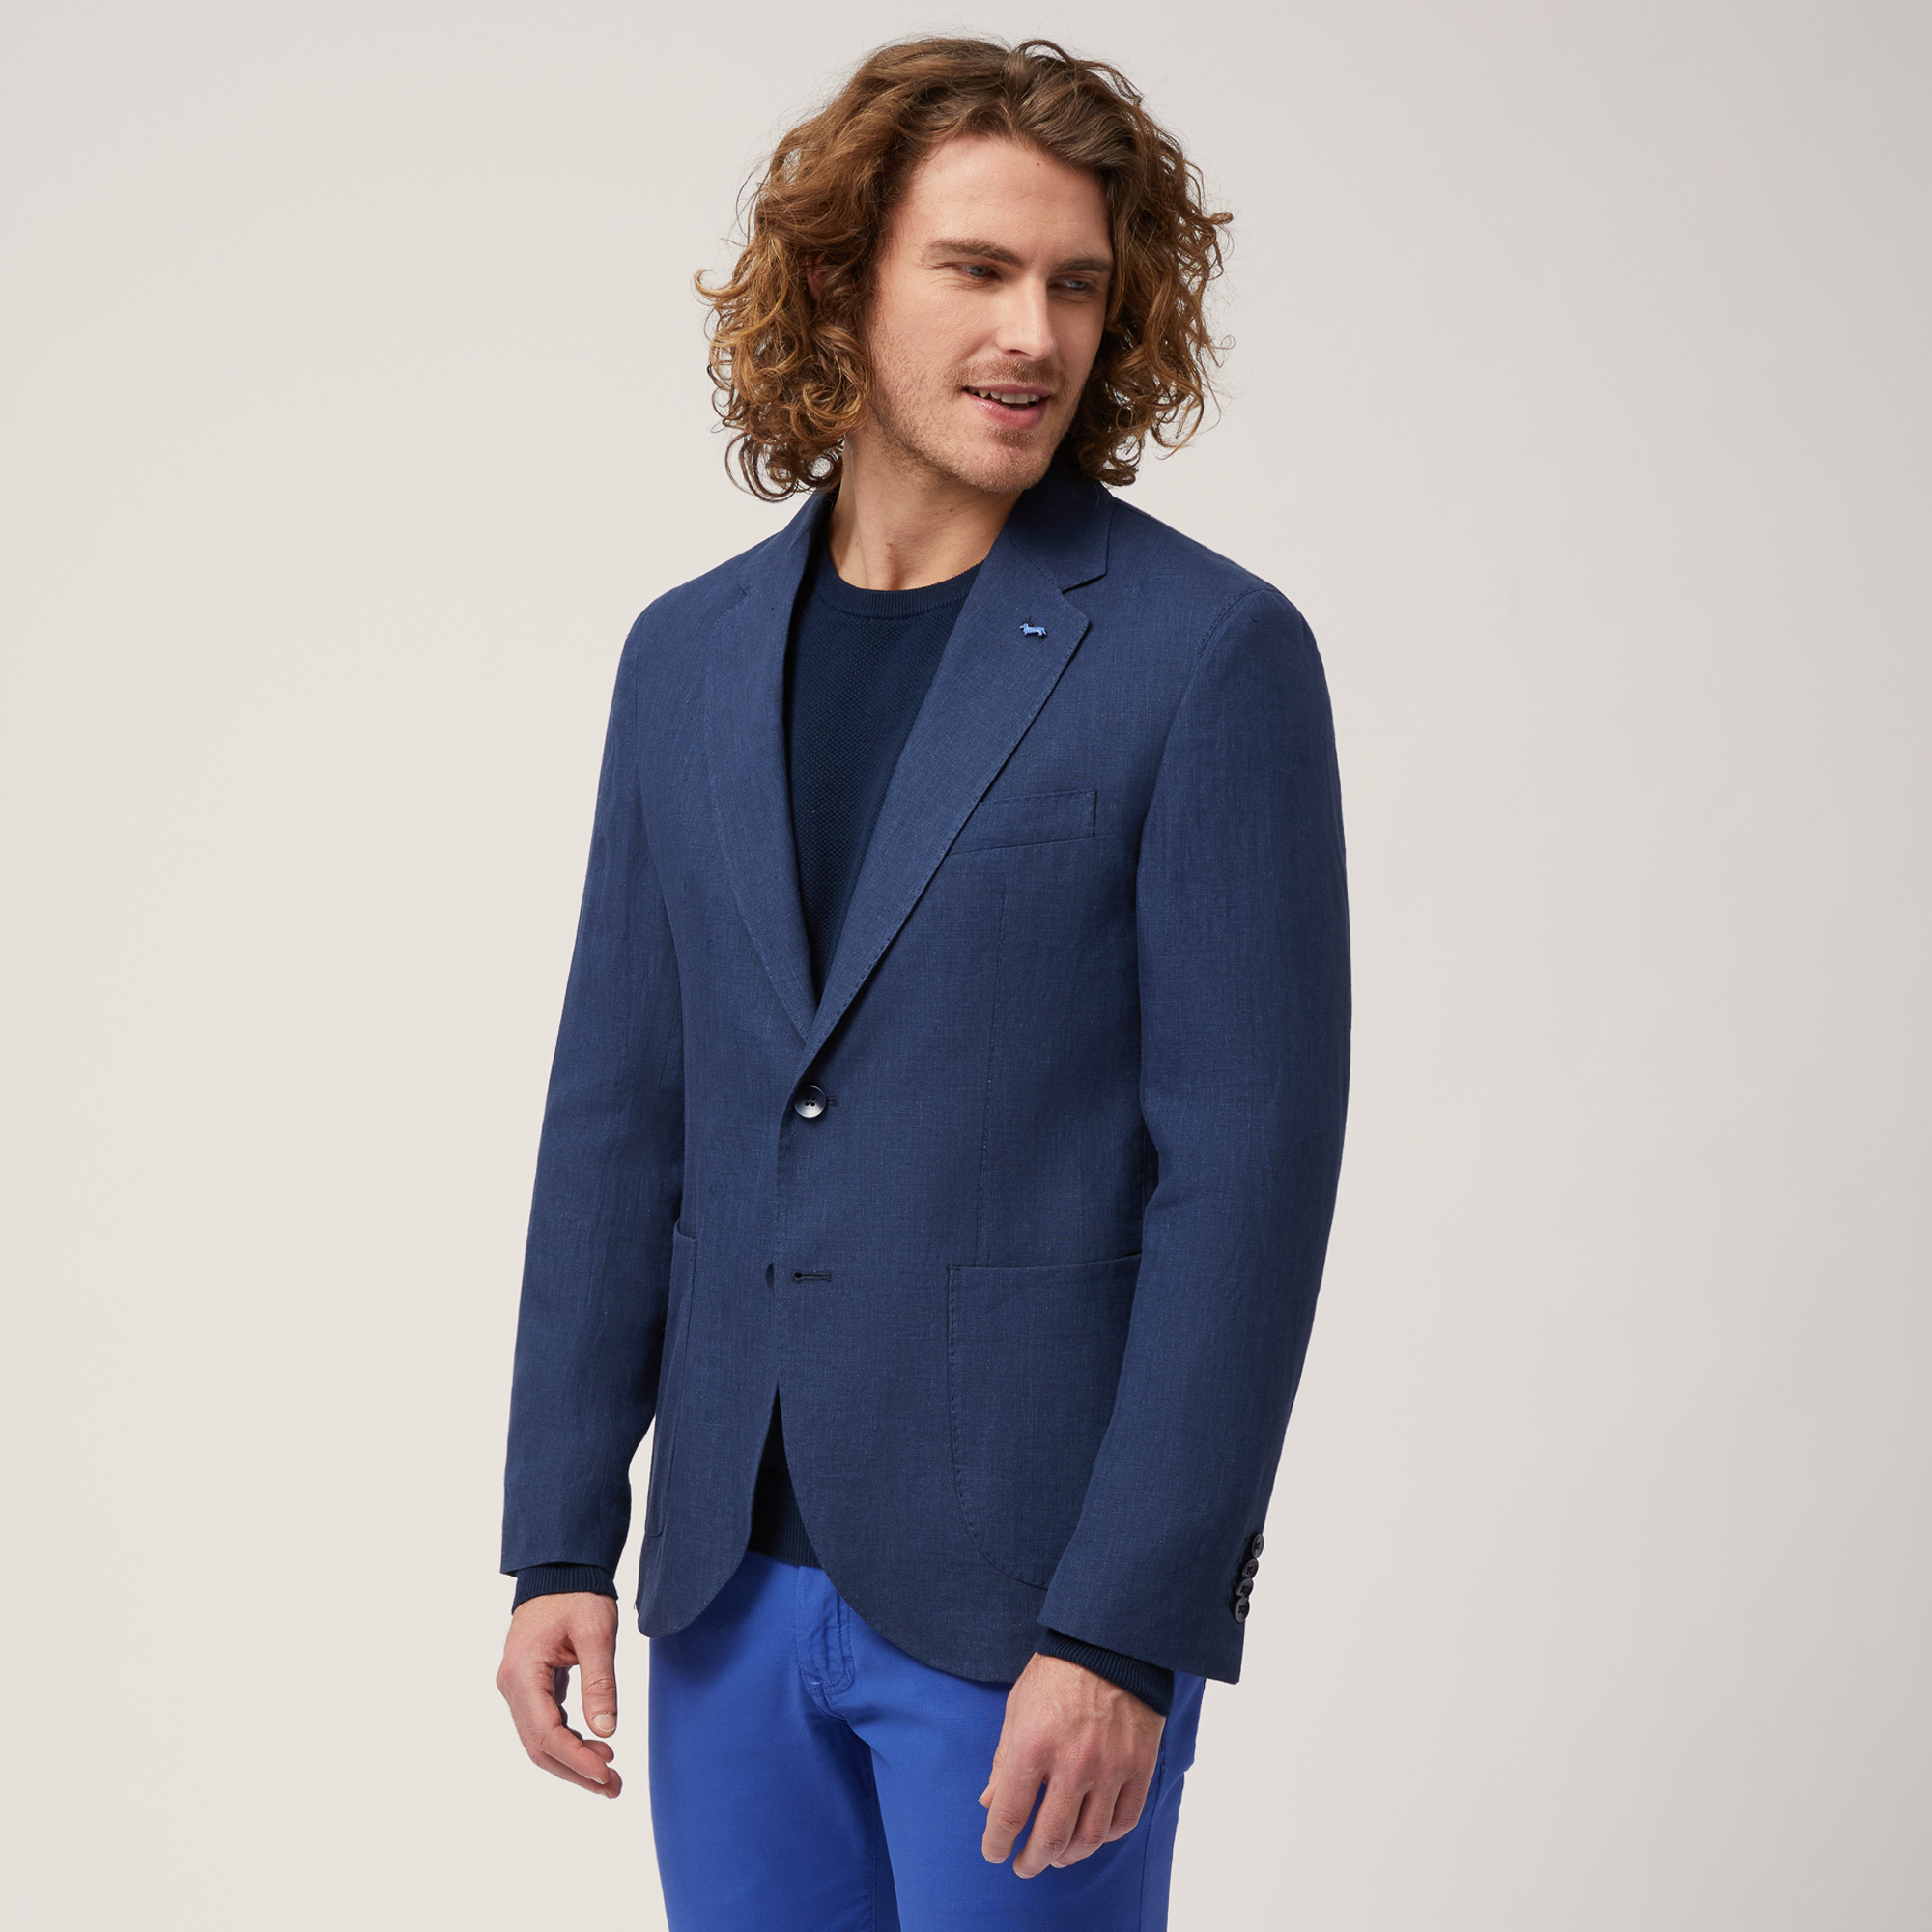 Linen Jacket with Pockets, Light Blue, large